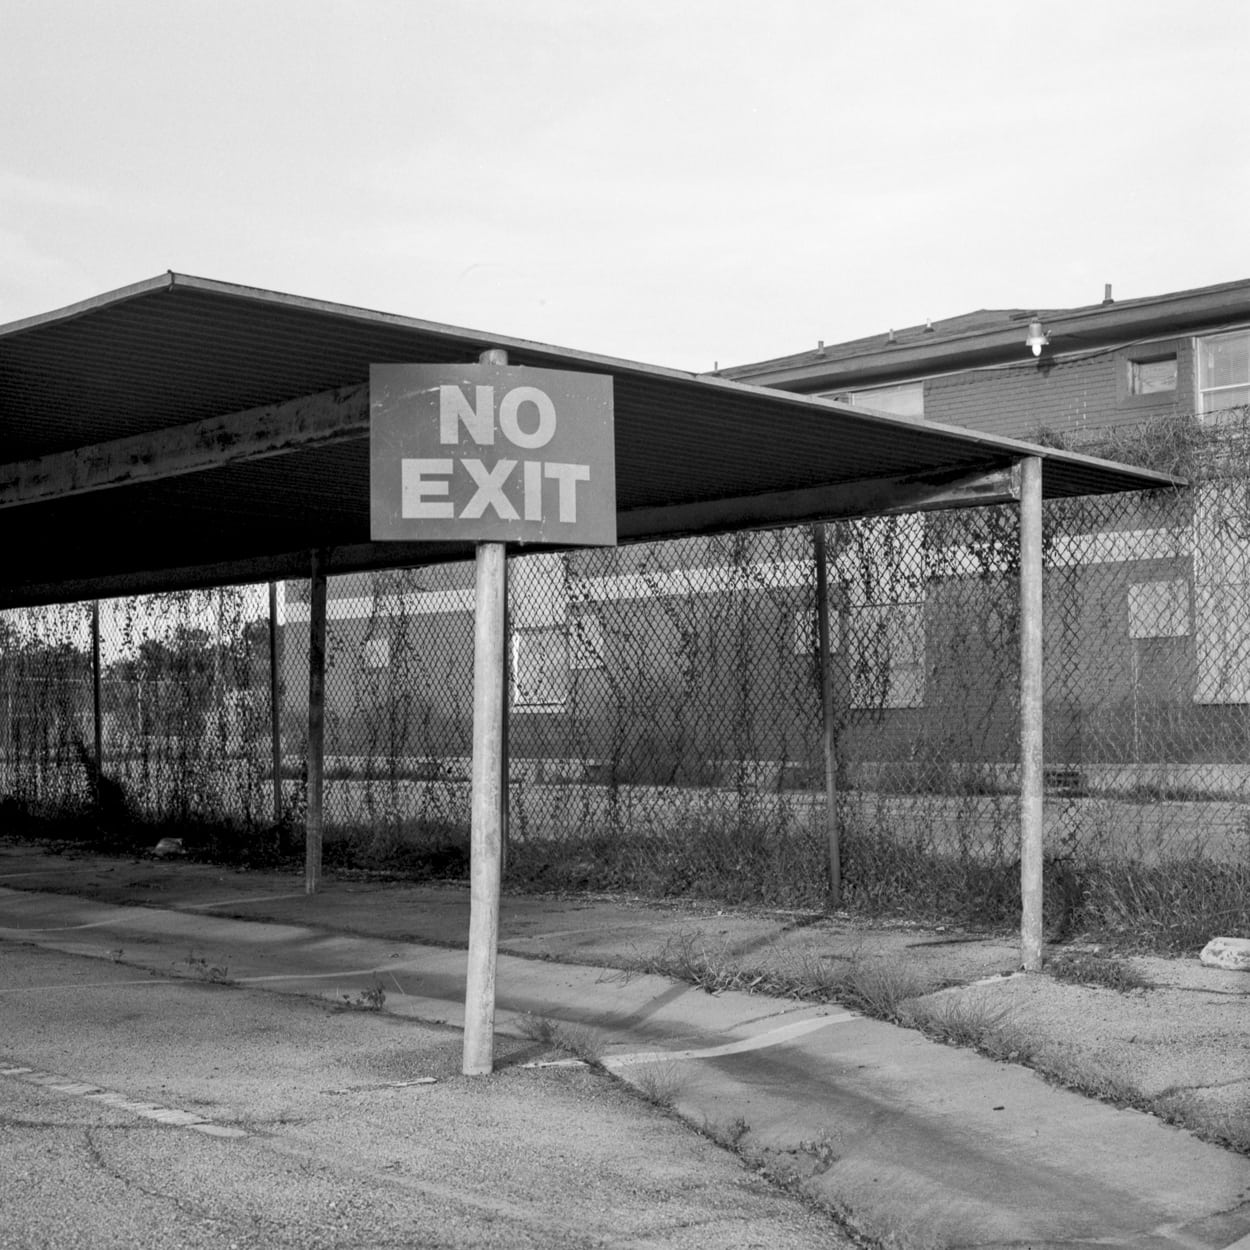 A no exit parking lot sign